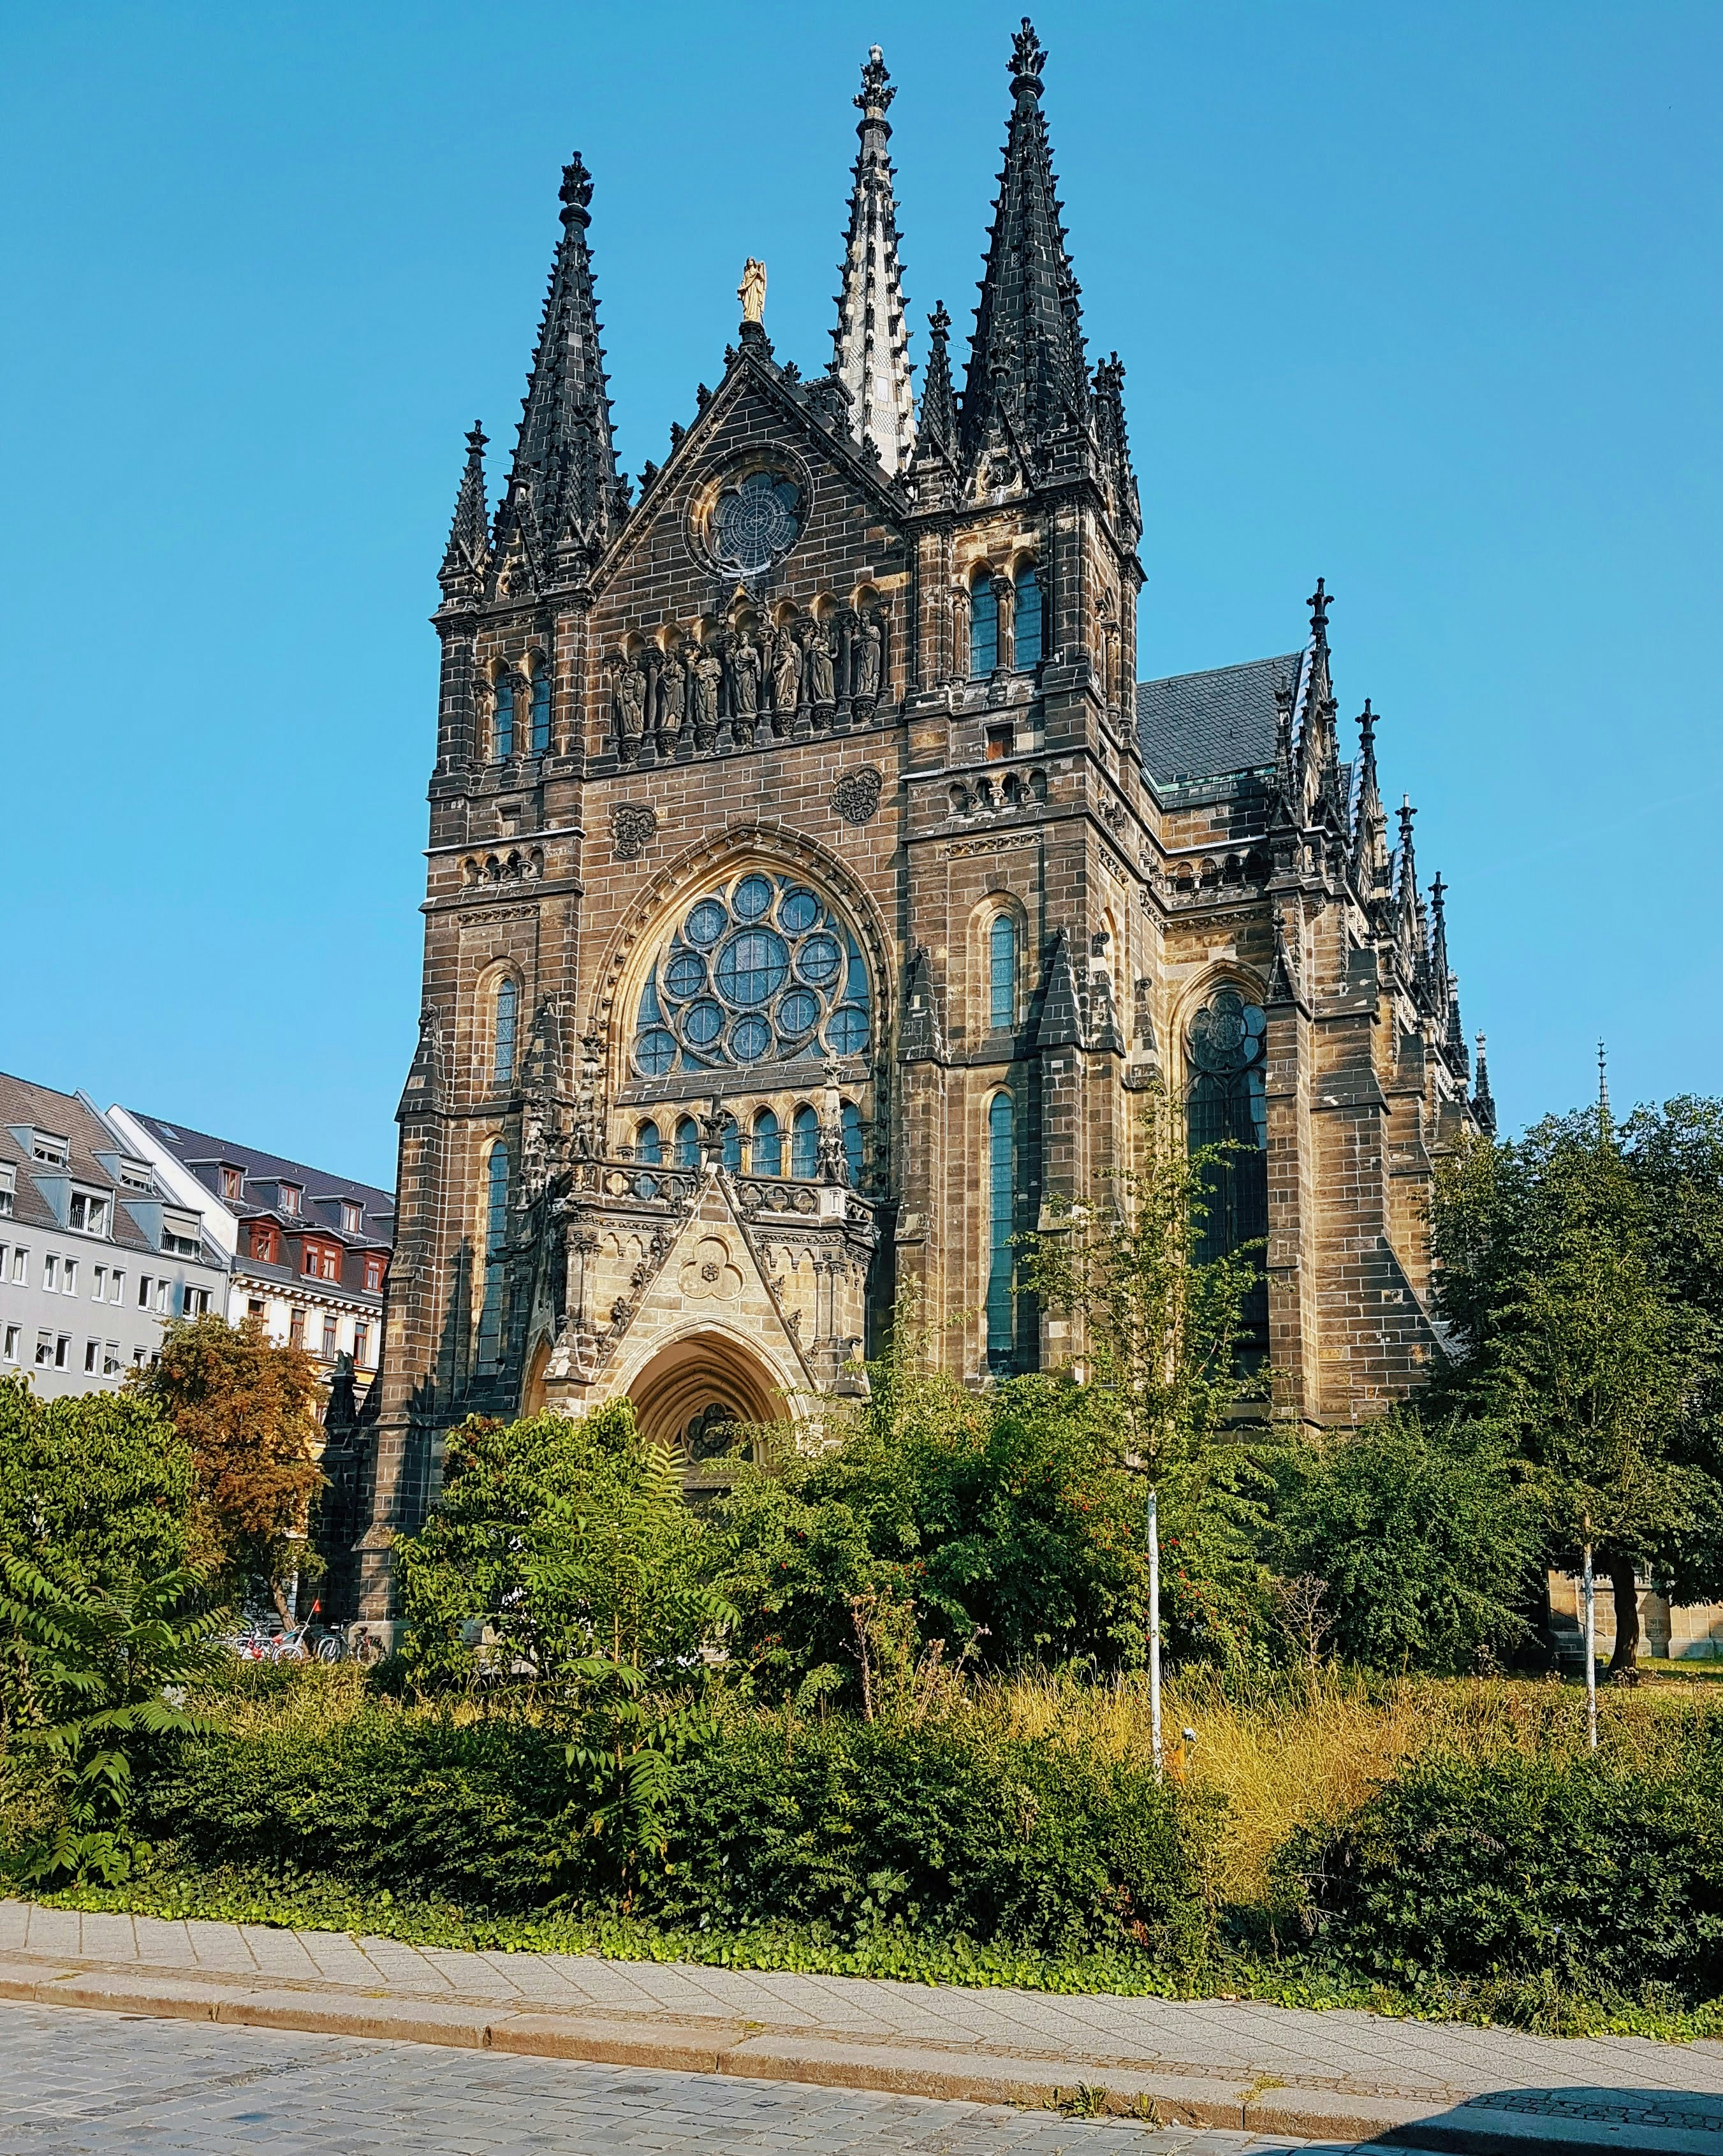 Peterskirche in Leipzig, Germany. For more visual travel inspiration visit our instagram: https://www.instagram.com/reiseuhu